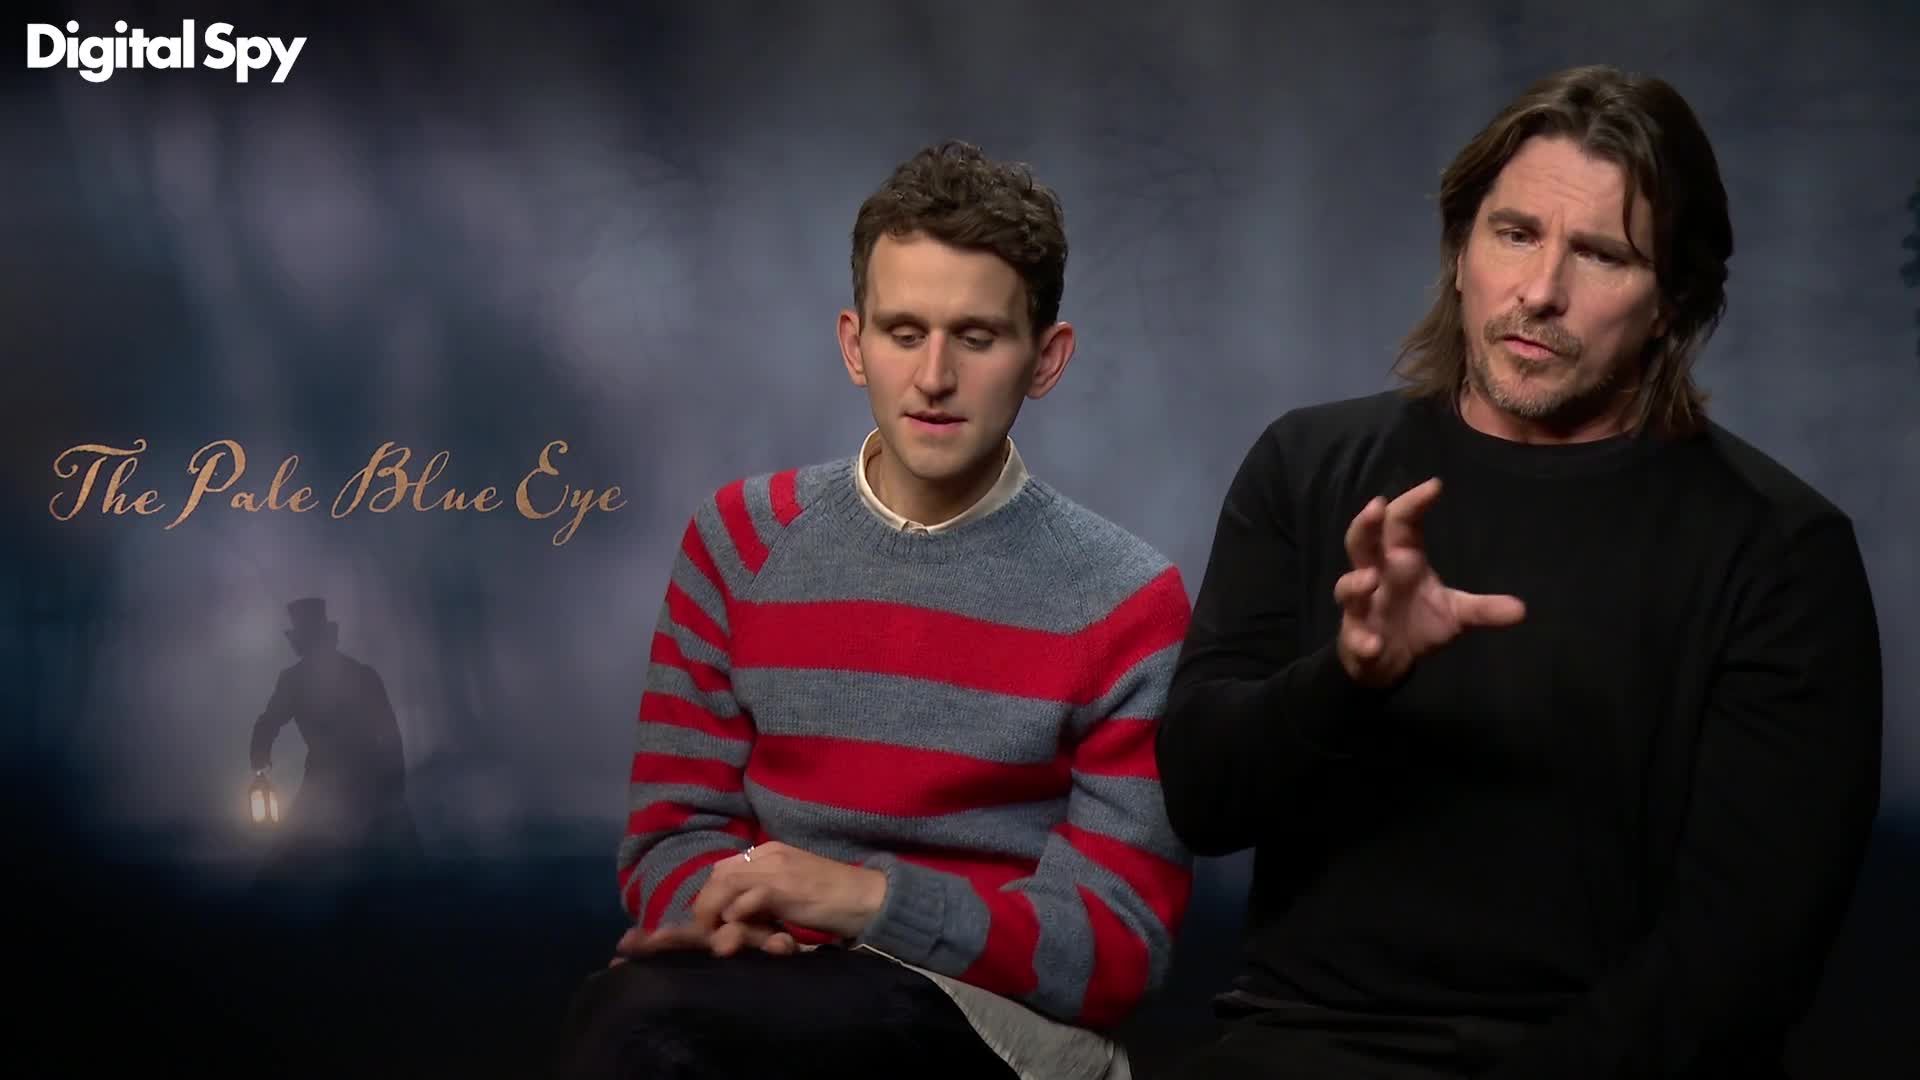 Christian Bale Teams Up with Edgar Allan Poe in Pale Blue Eye Trailer